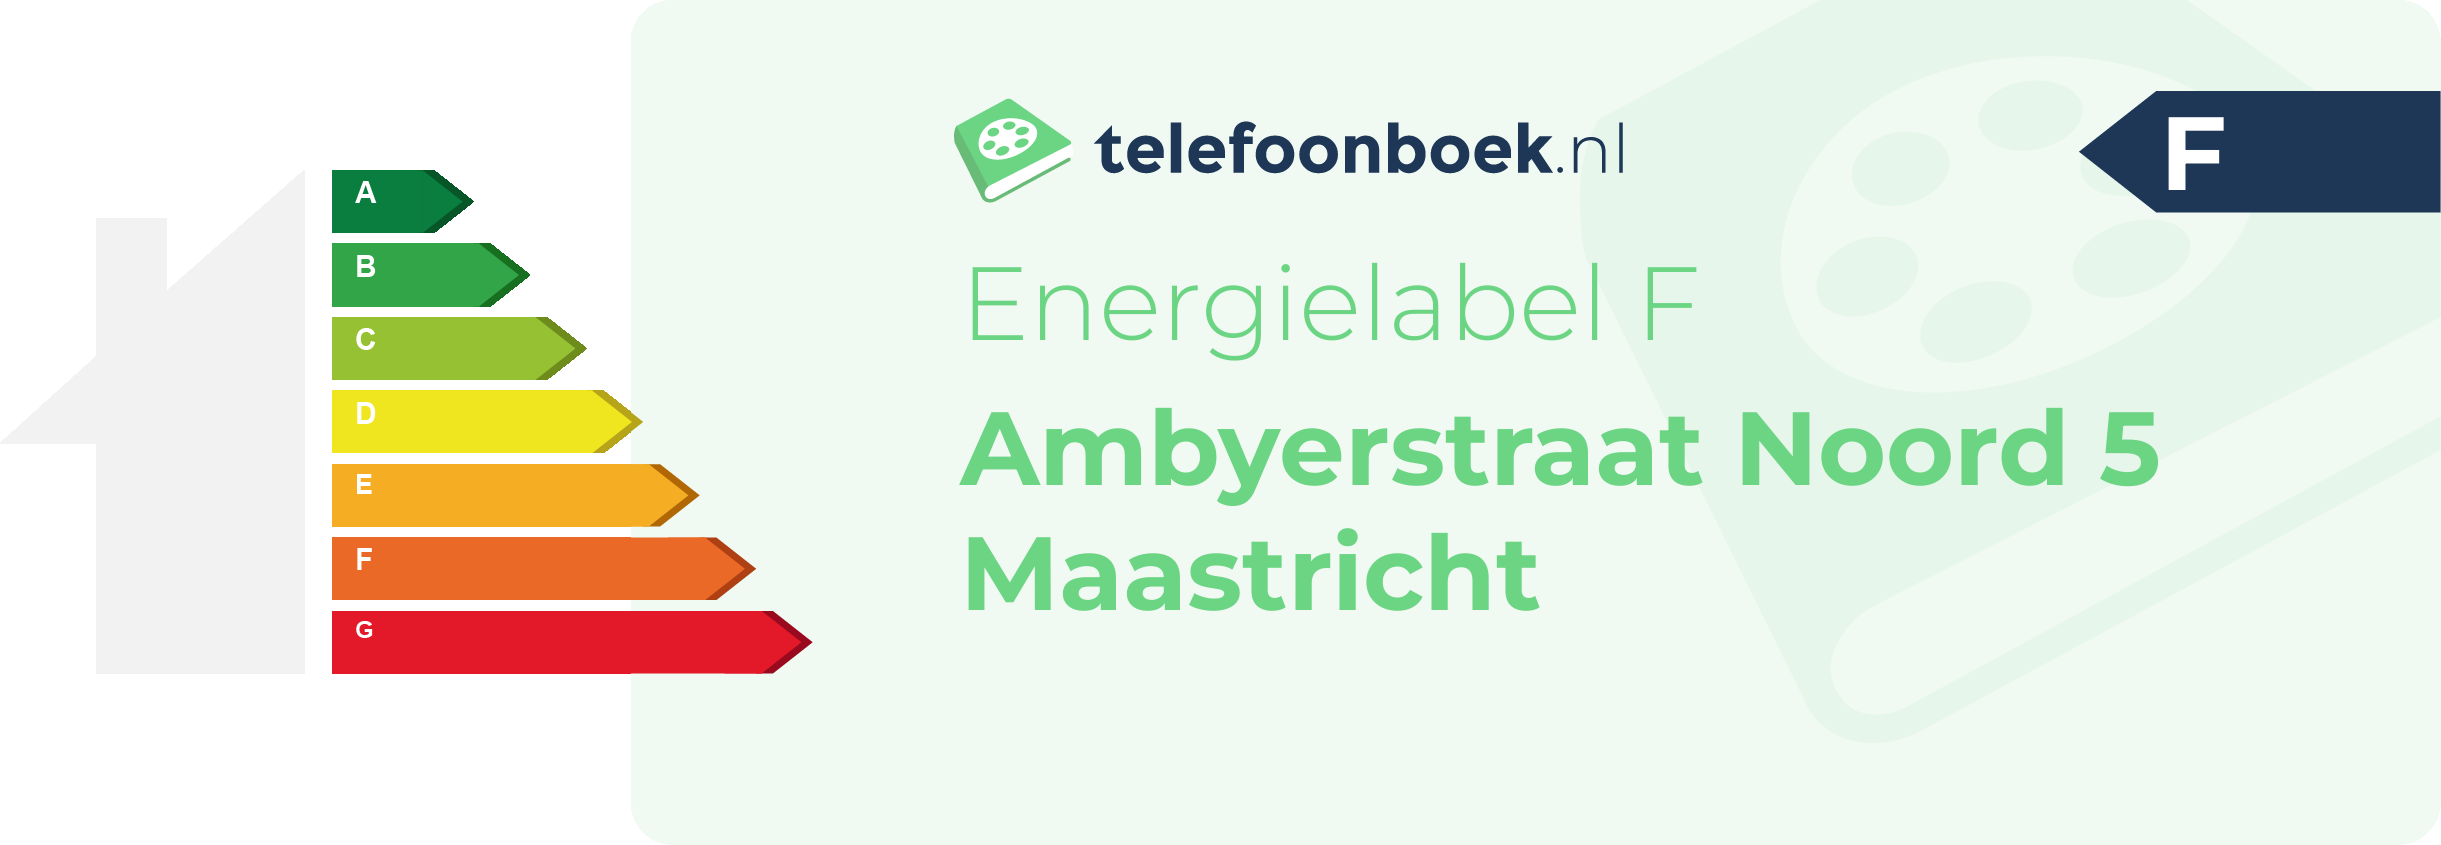 Energielabel Ambyerstraat Noord 5 Maastricht